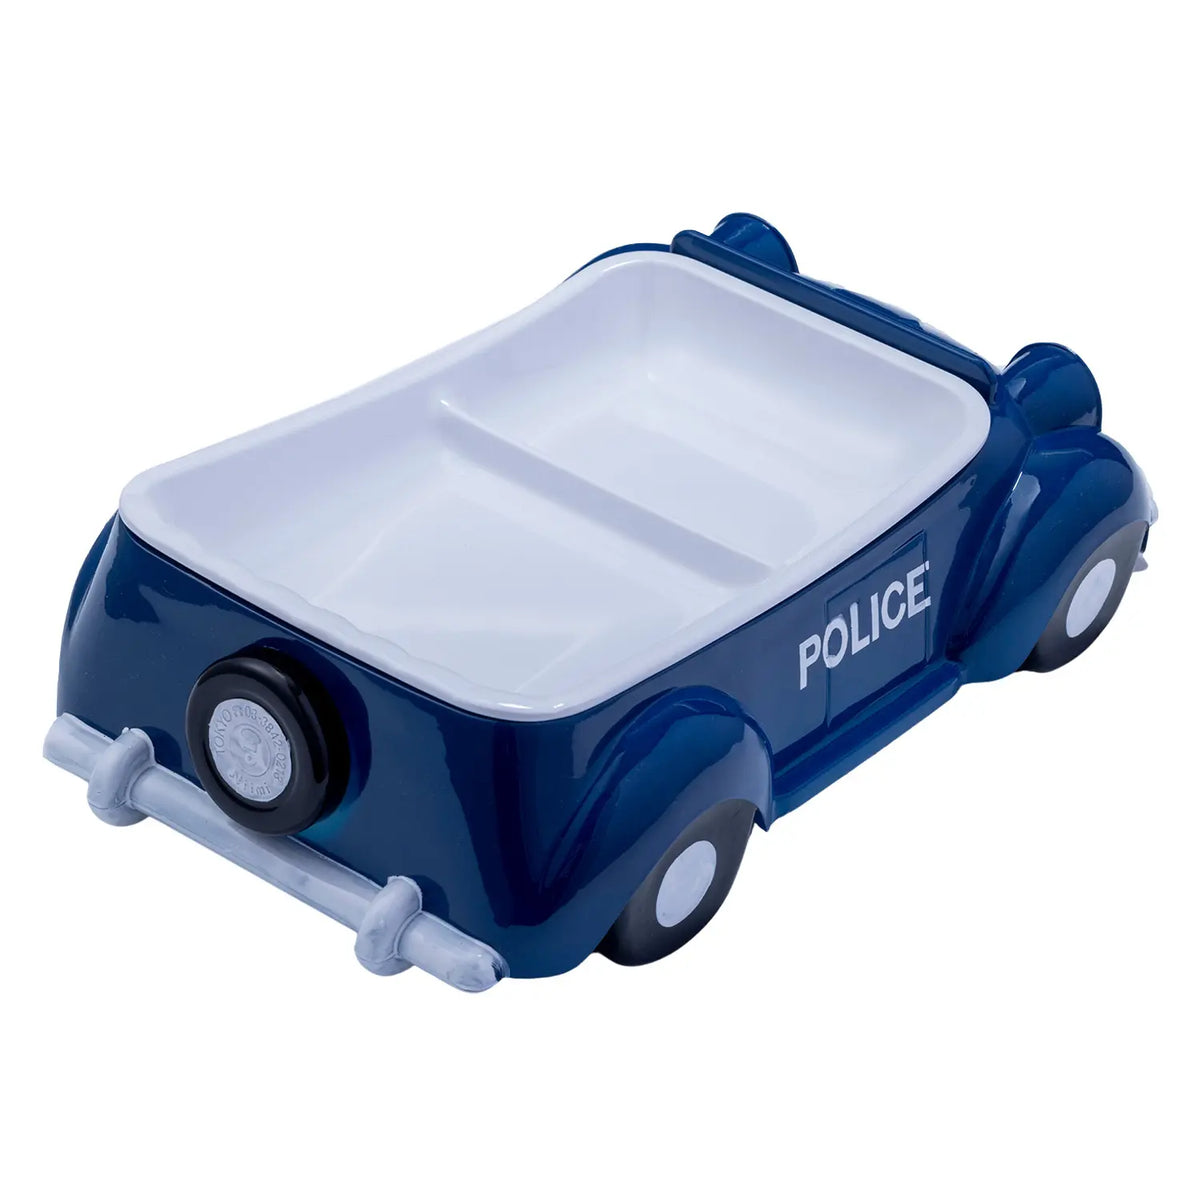 EBM ABS Resin Kids Plate Police Car